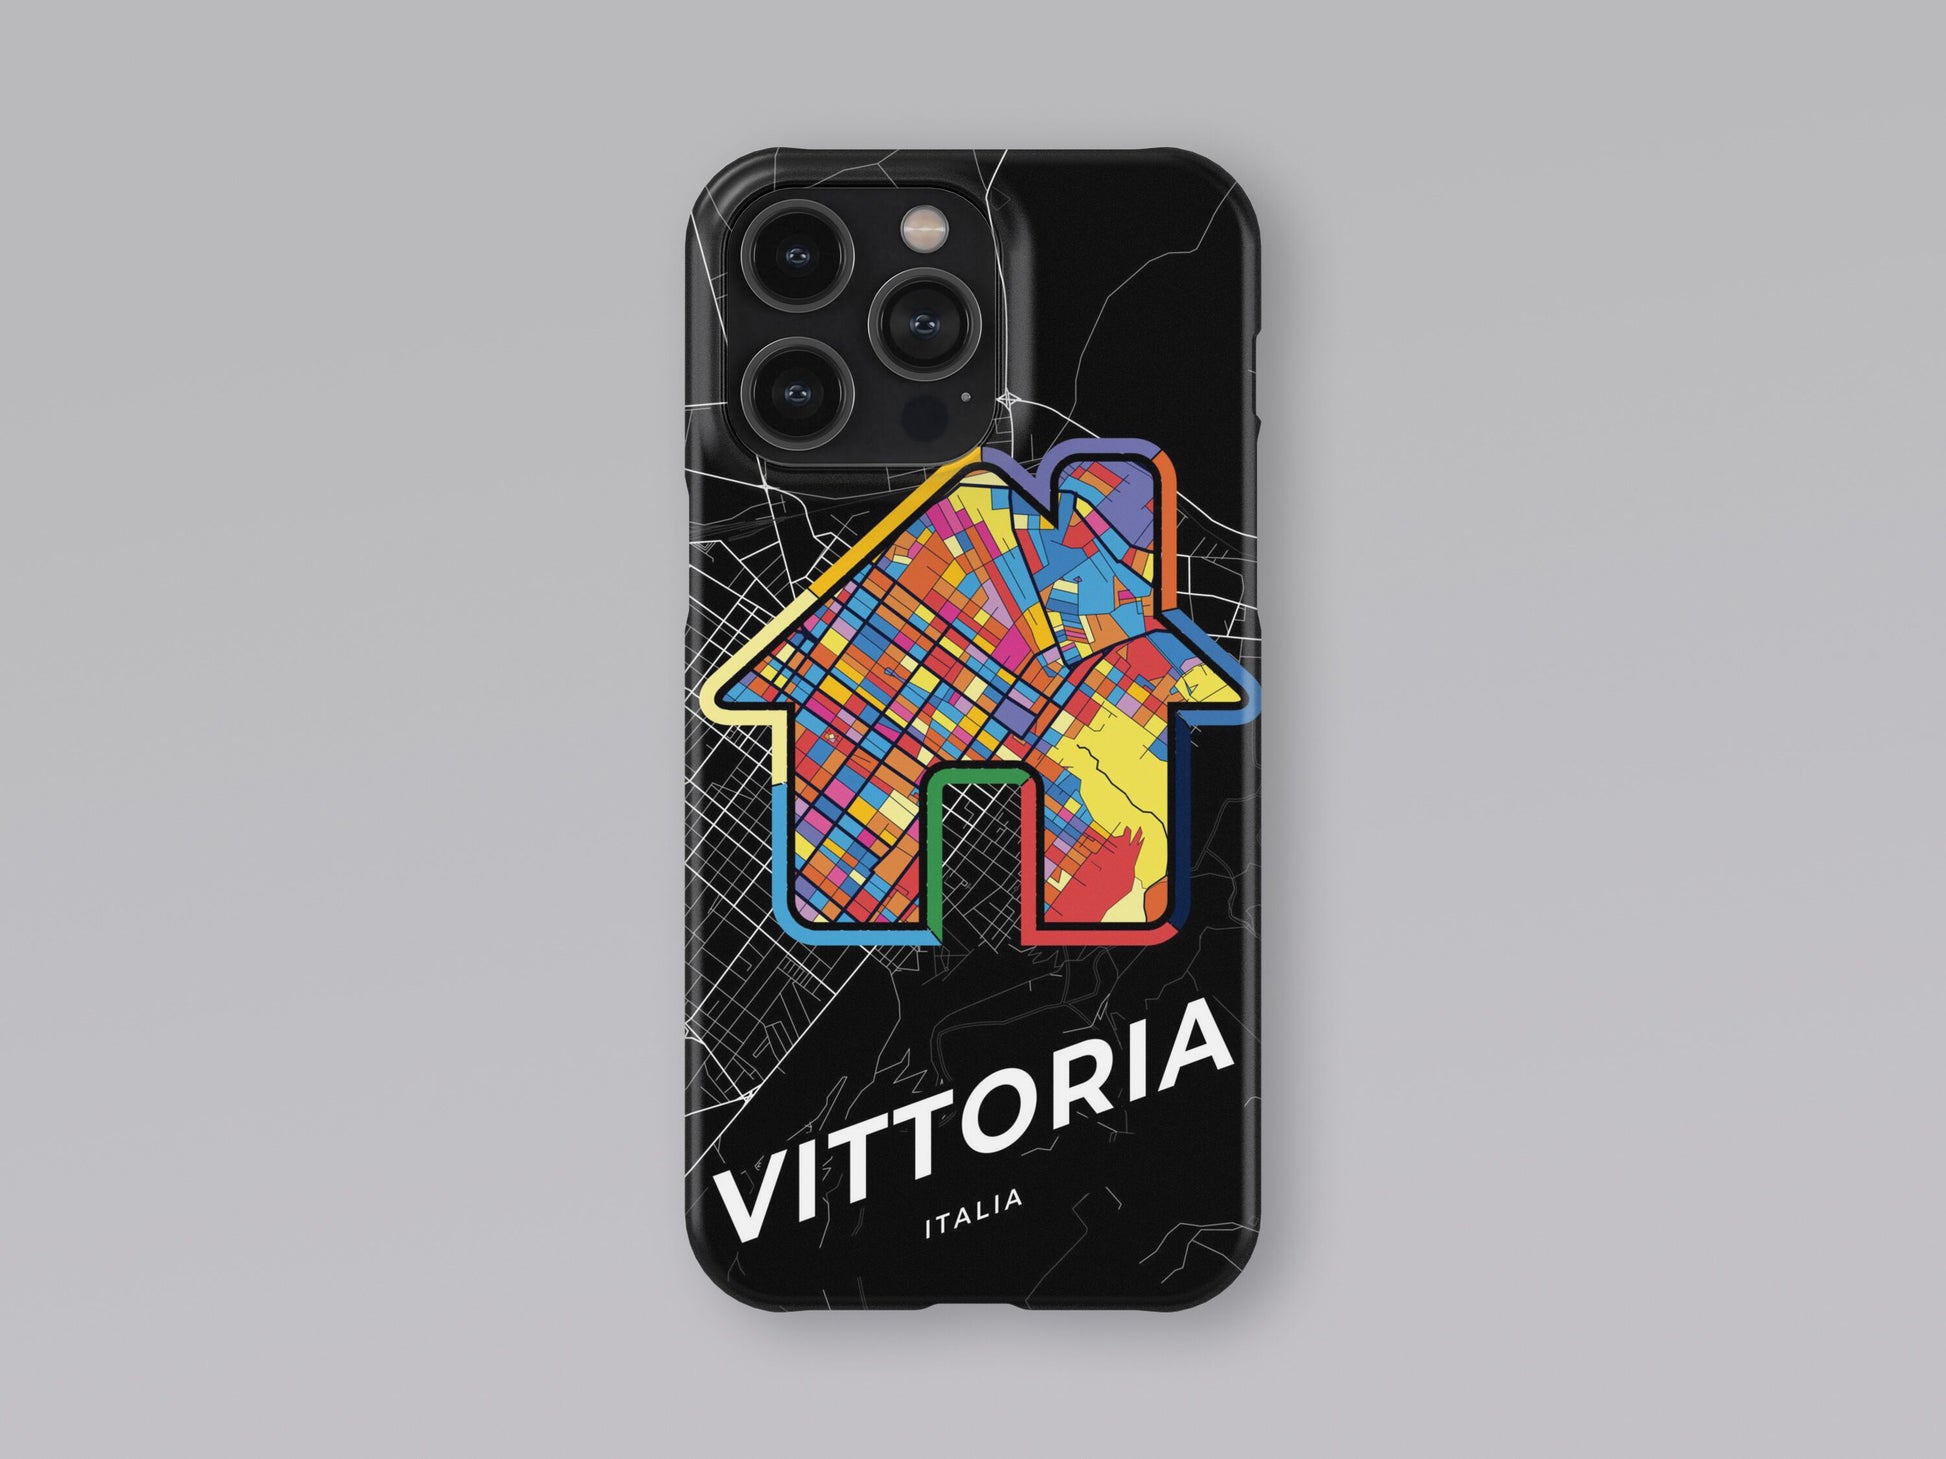 Vittoria Italy slim phone case with colorful icon 3